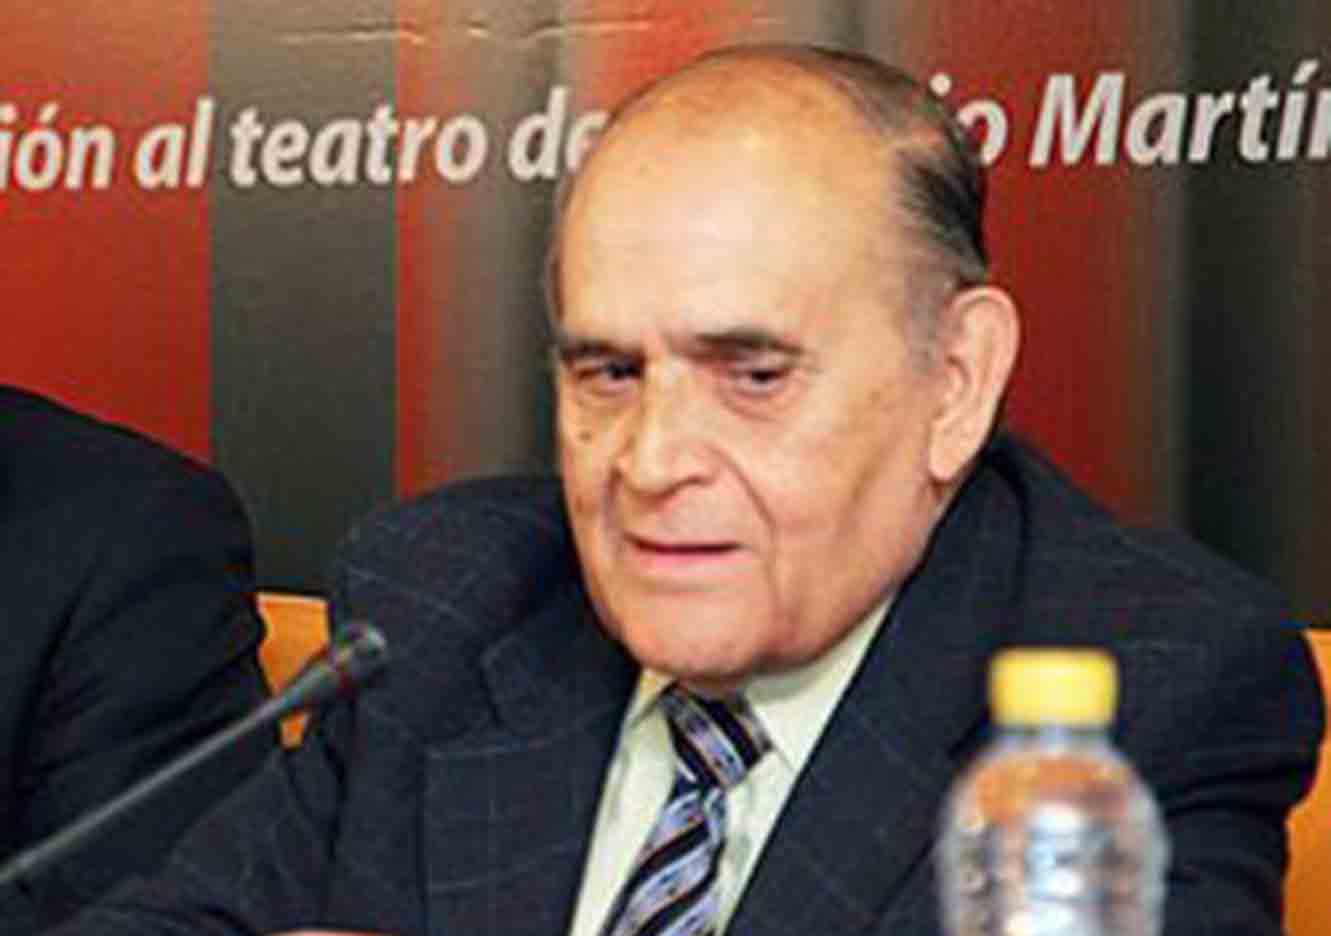 Antonio Martínez Ballesteros